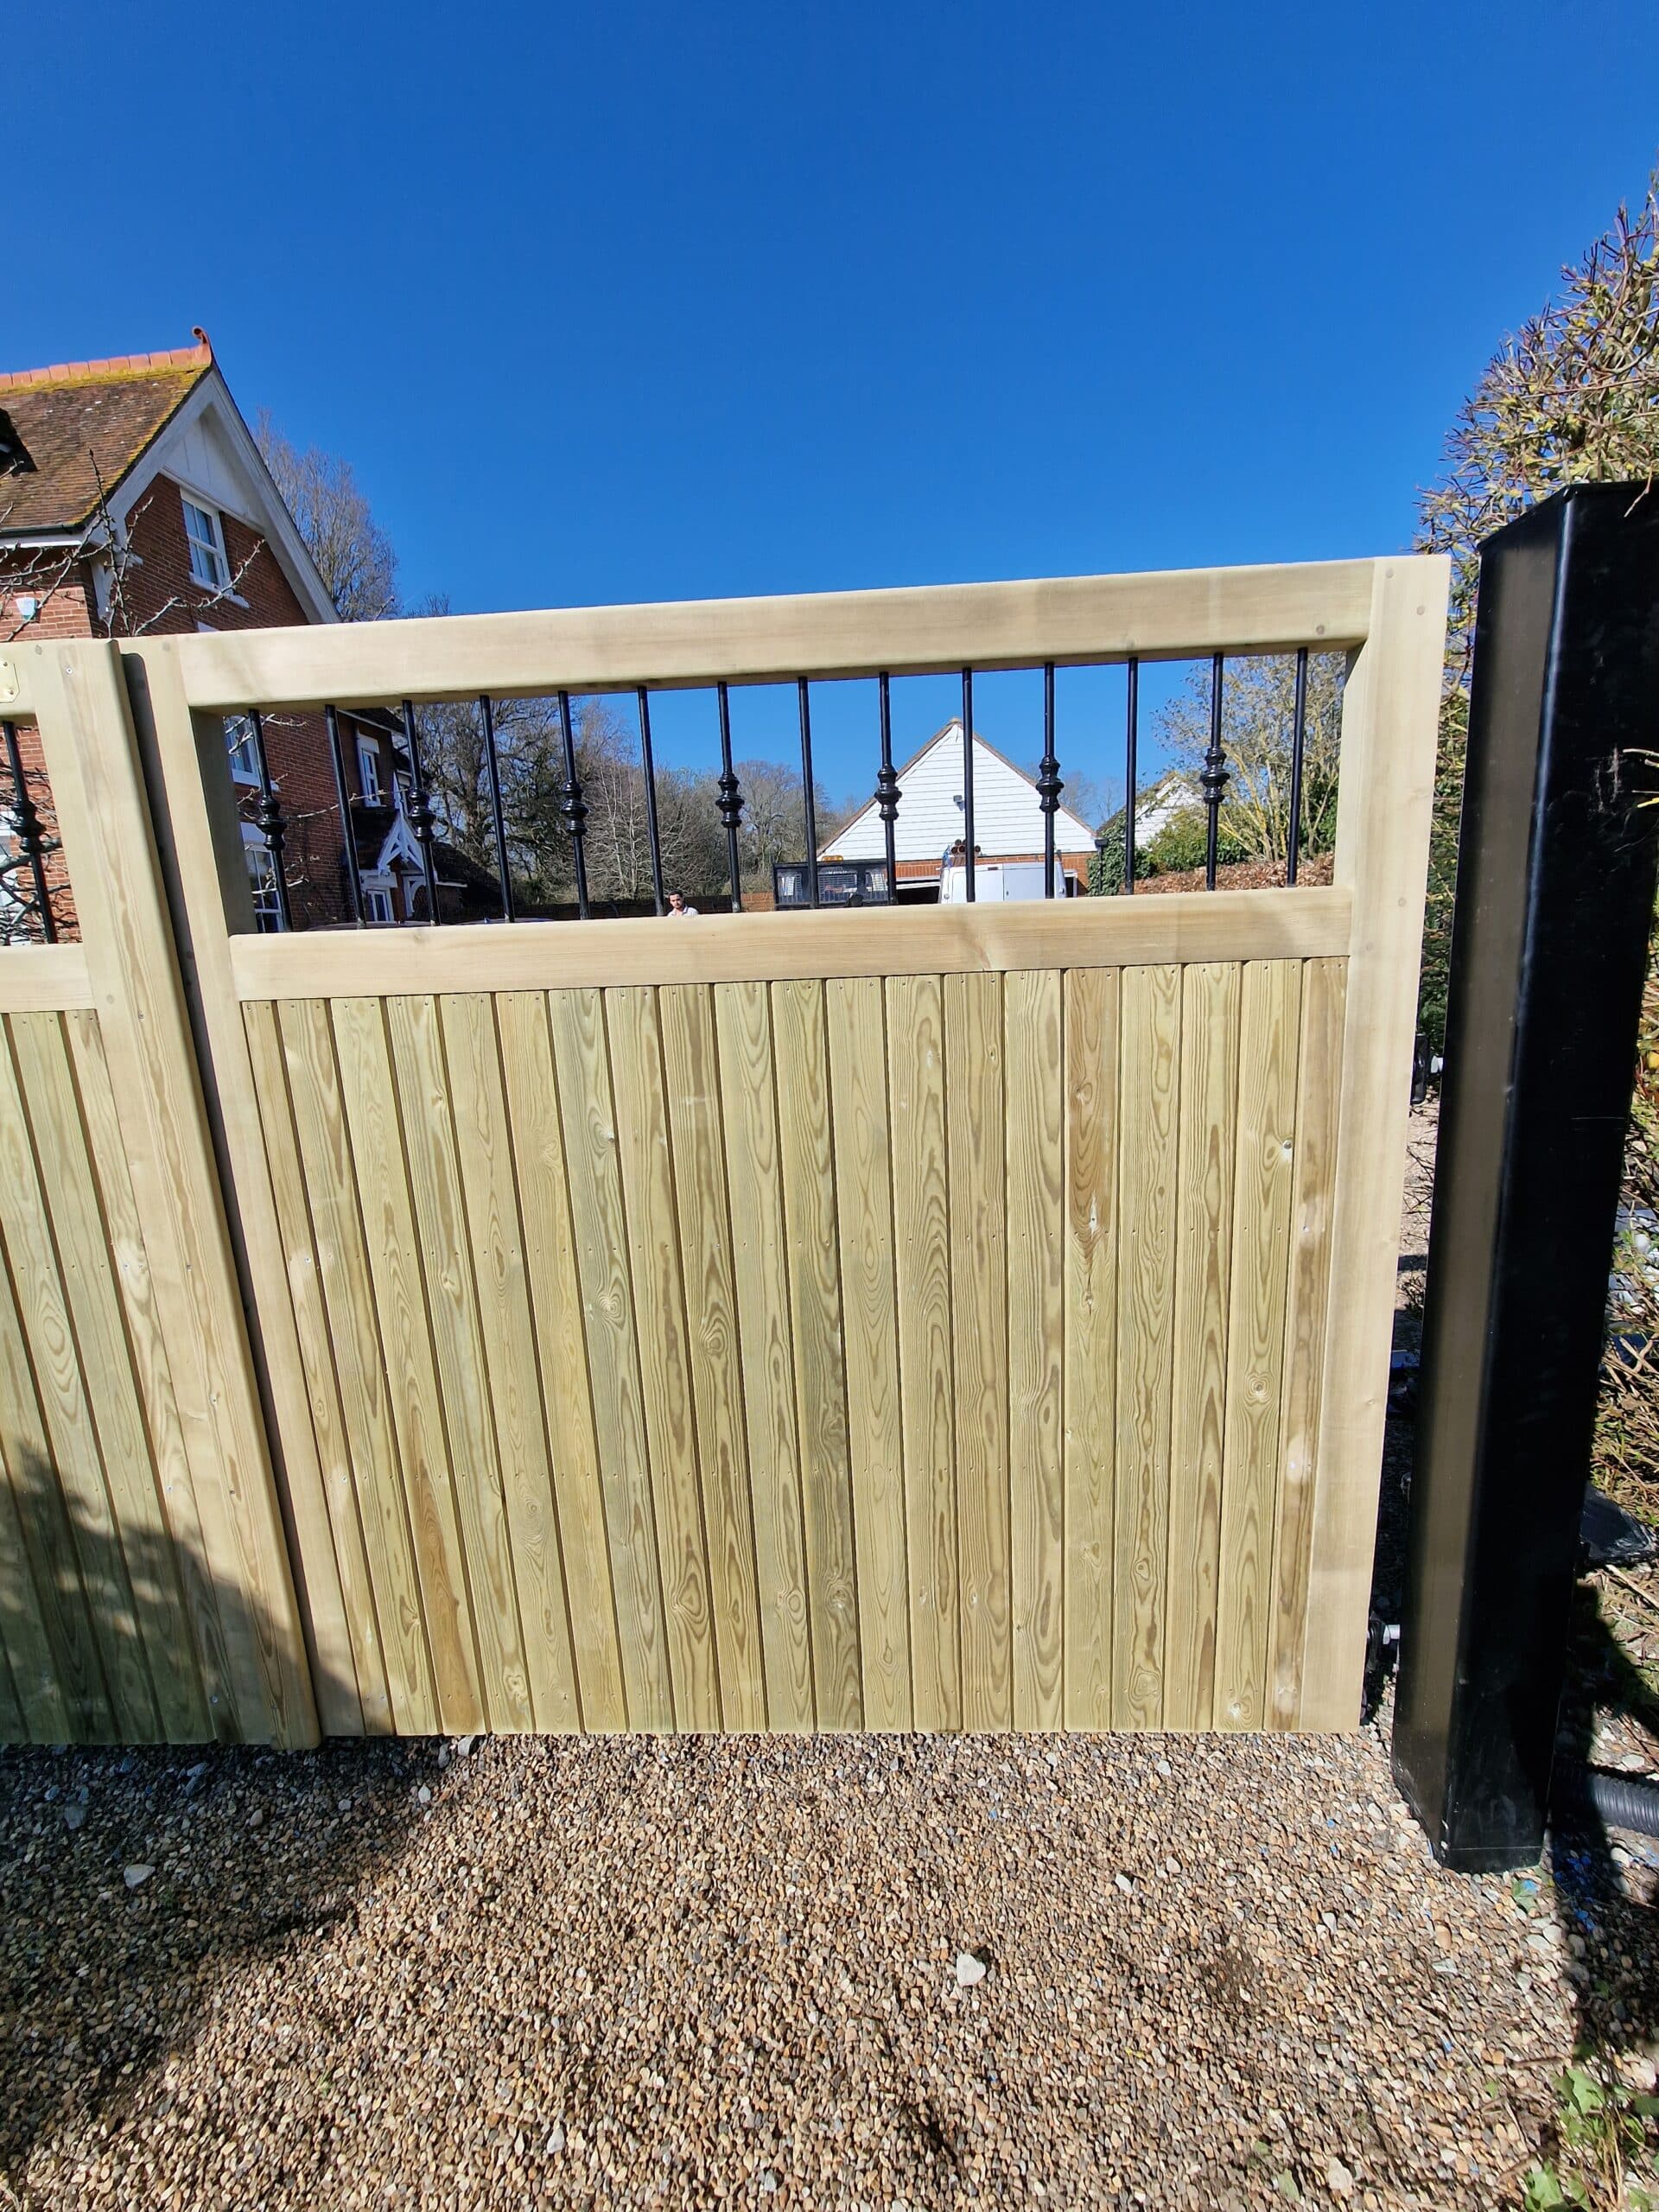 rye courtyard driveway gate railings topper 2